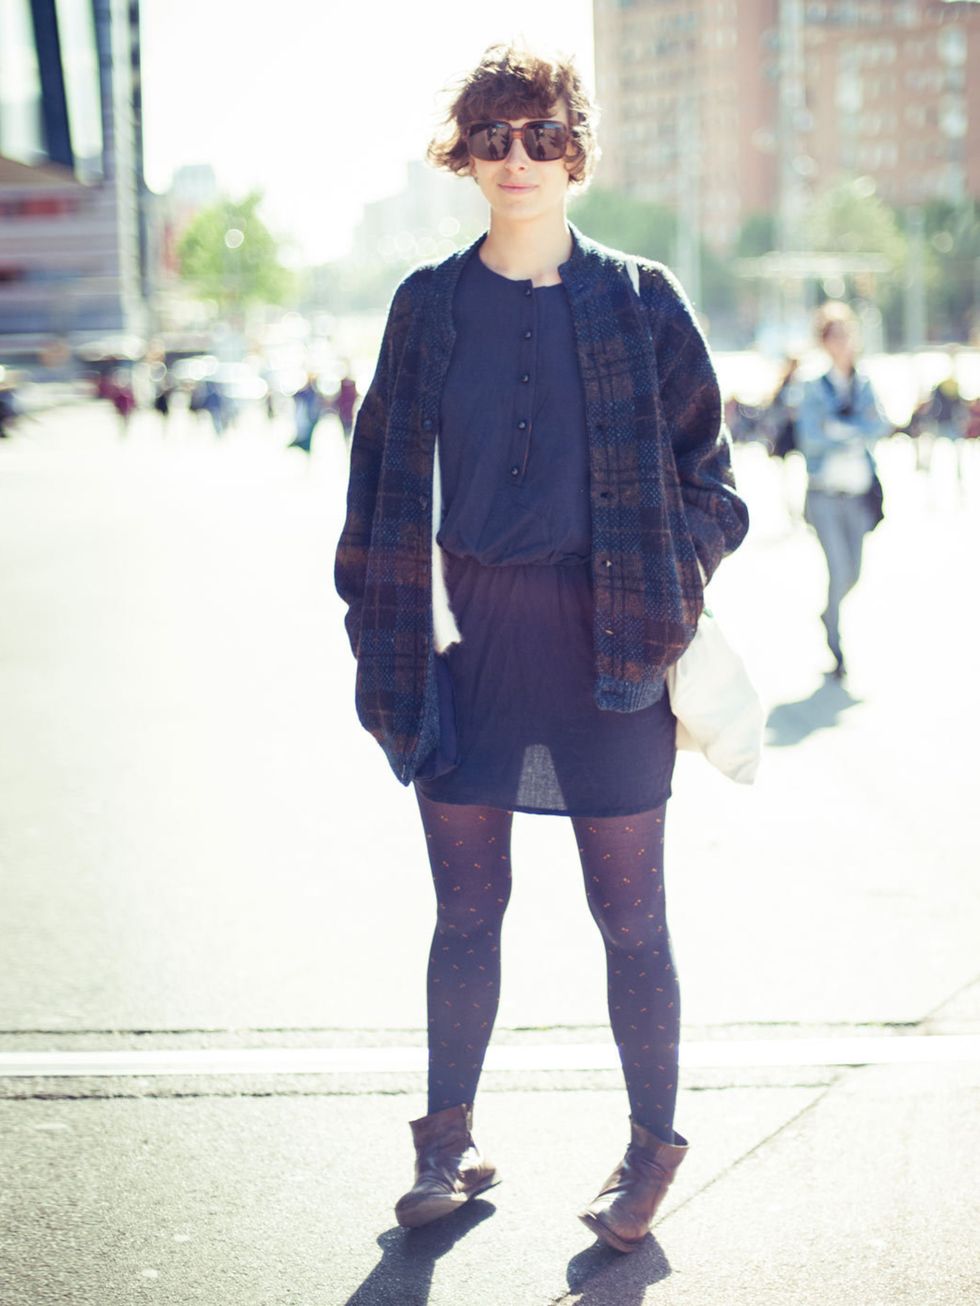 <p>Jeanne Francis wears Sessen jacket, vintage dress and Camper boots.</p><p><em>More street style inspiration...</em></p><p><a href="http://www.elleuk.com/style/street-style/field-day-festival-2013-street-style">Field Day street style</a></p><p><a href="